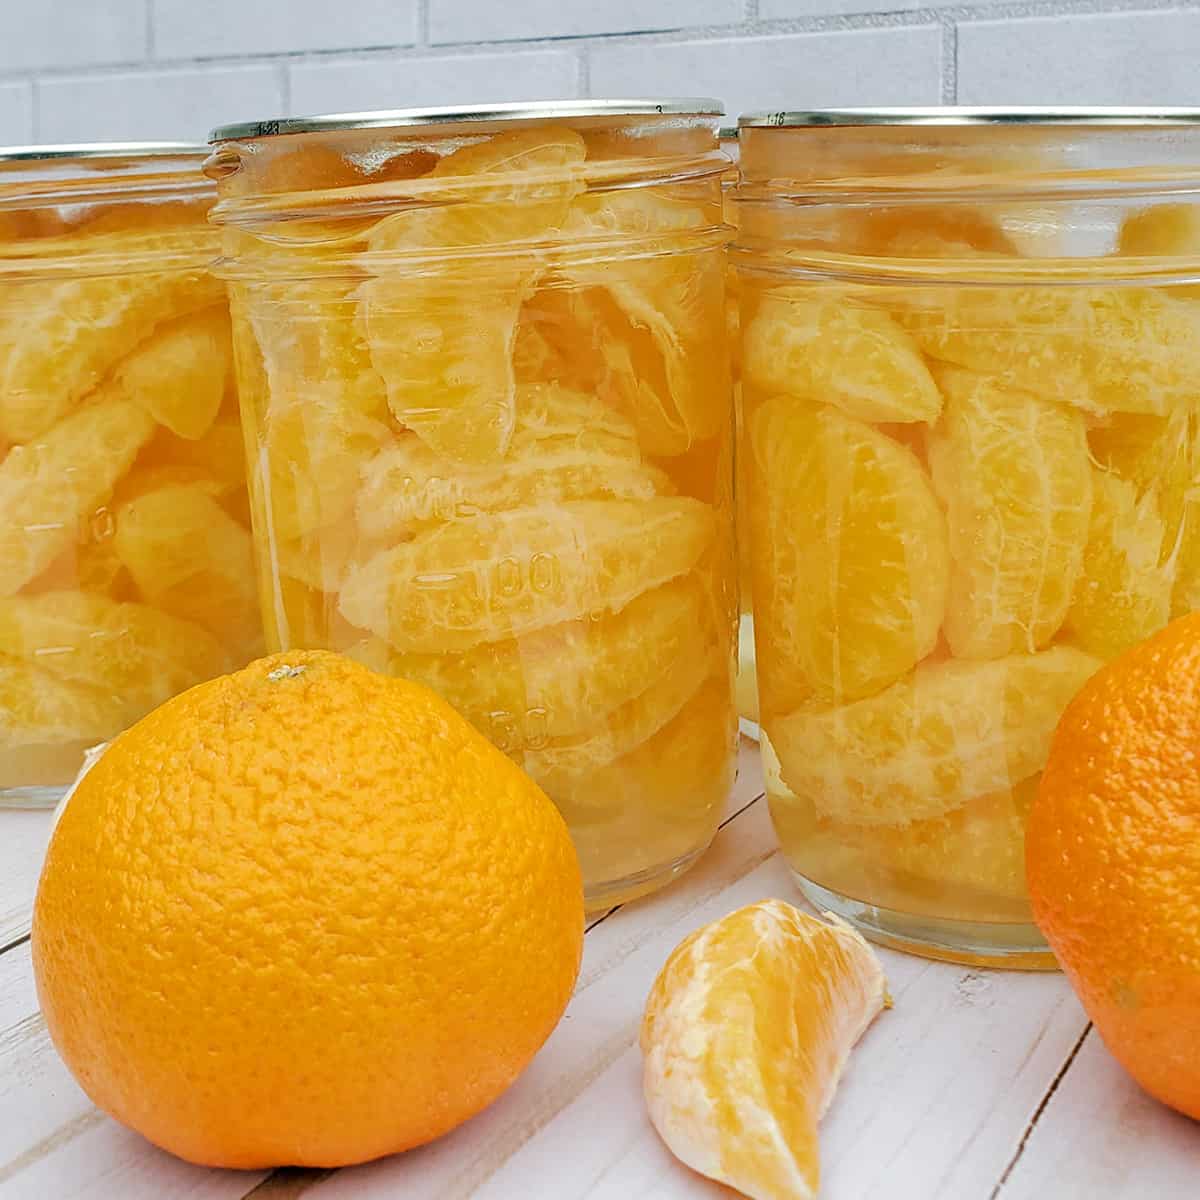 Canned jars of madarin organes and a fresh orange.